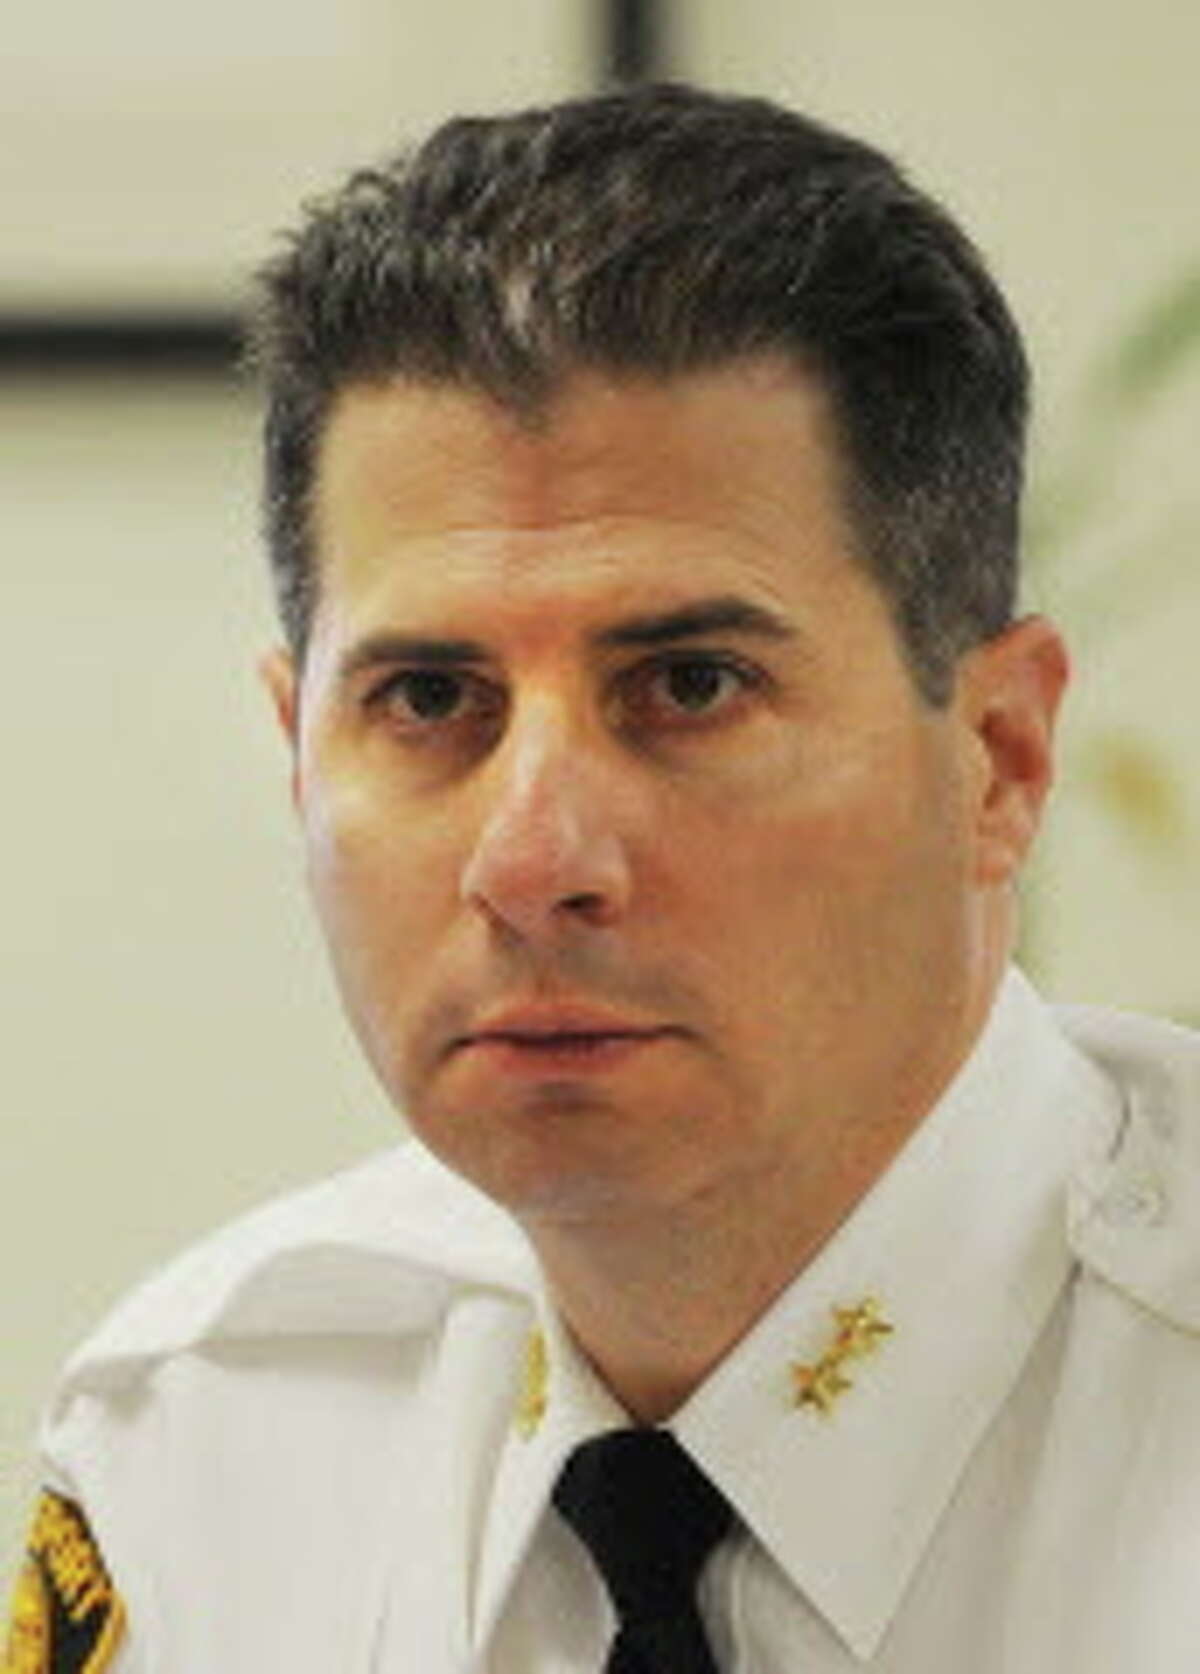 Bridgeport Police Assistant Chief James Nardozzi.